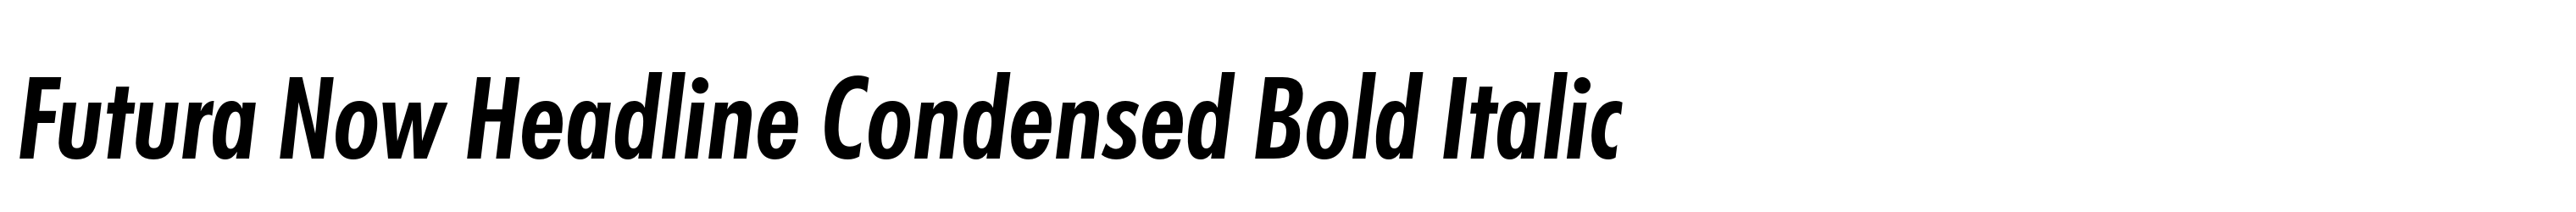 Futura Now Headline Condensed Bold Italic